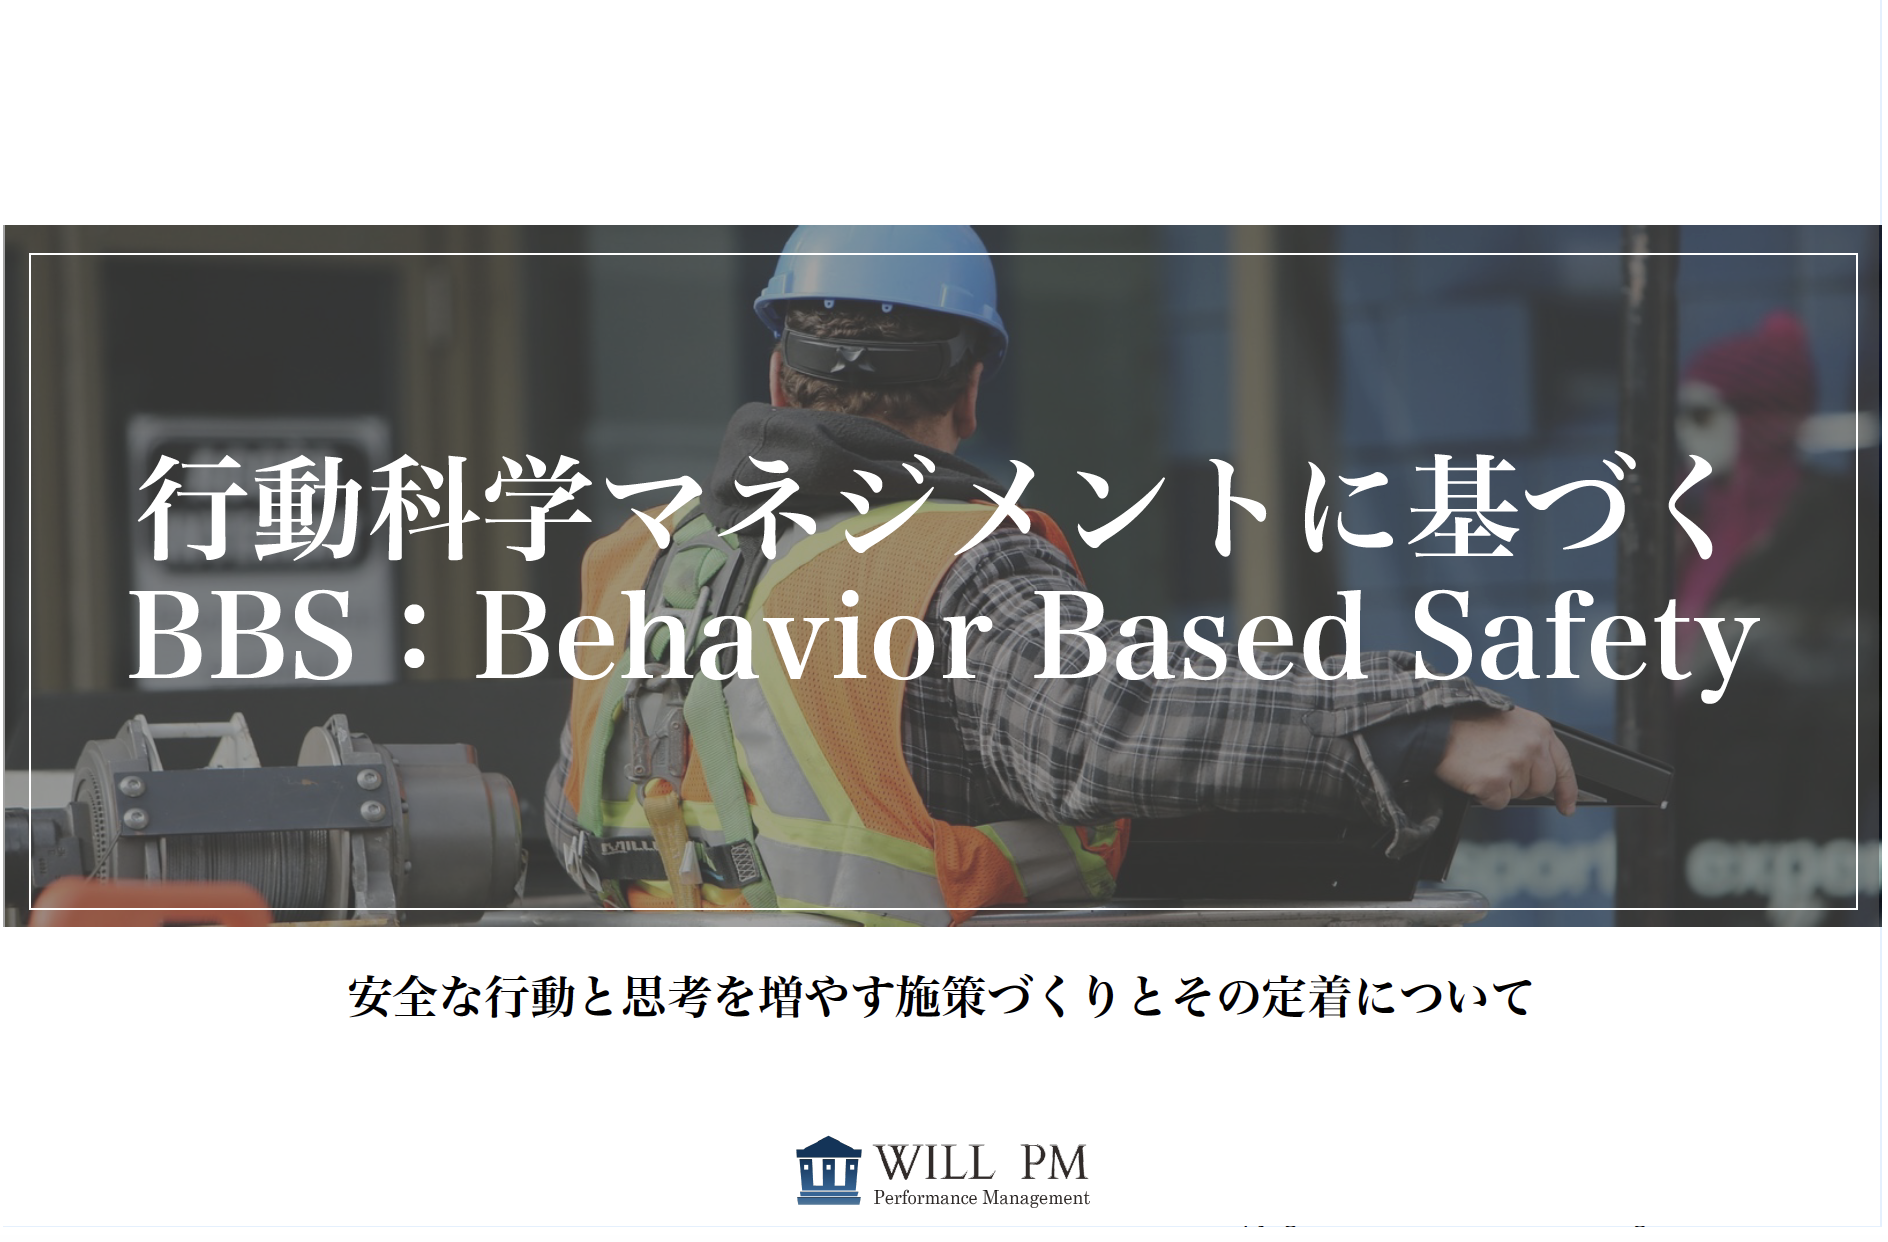 Behavior Based Safety 理解促進ガイド